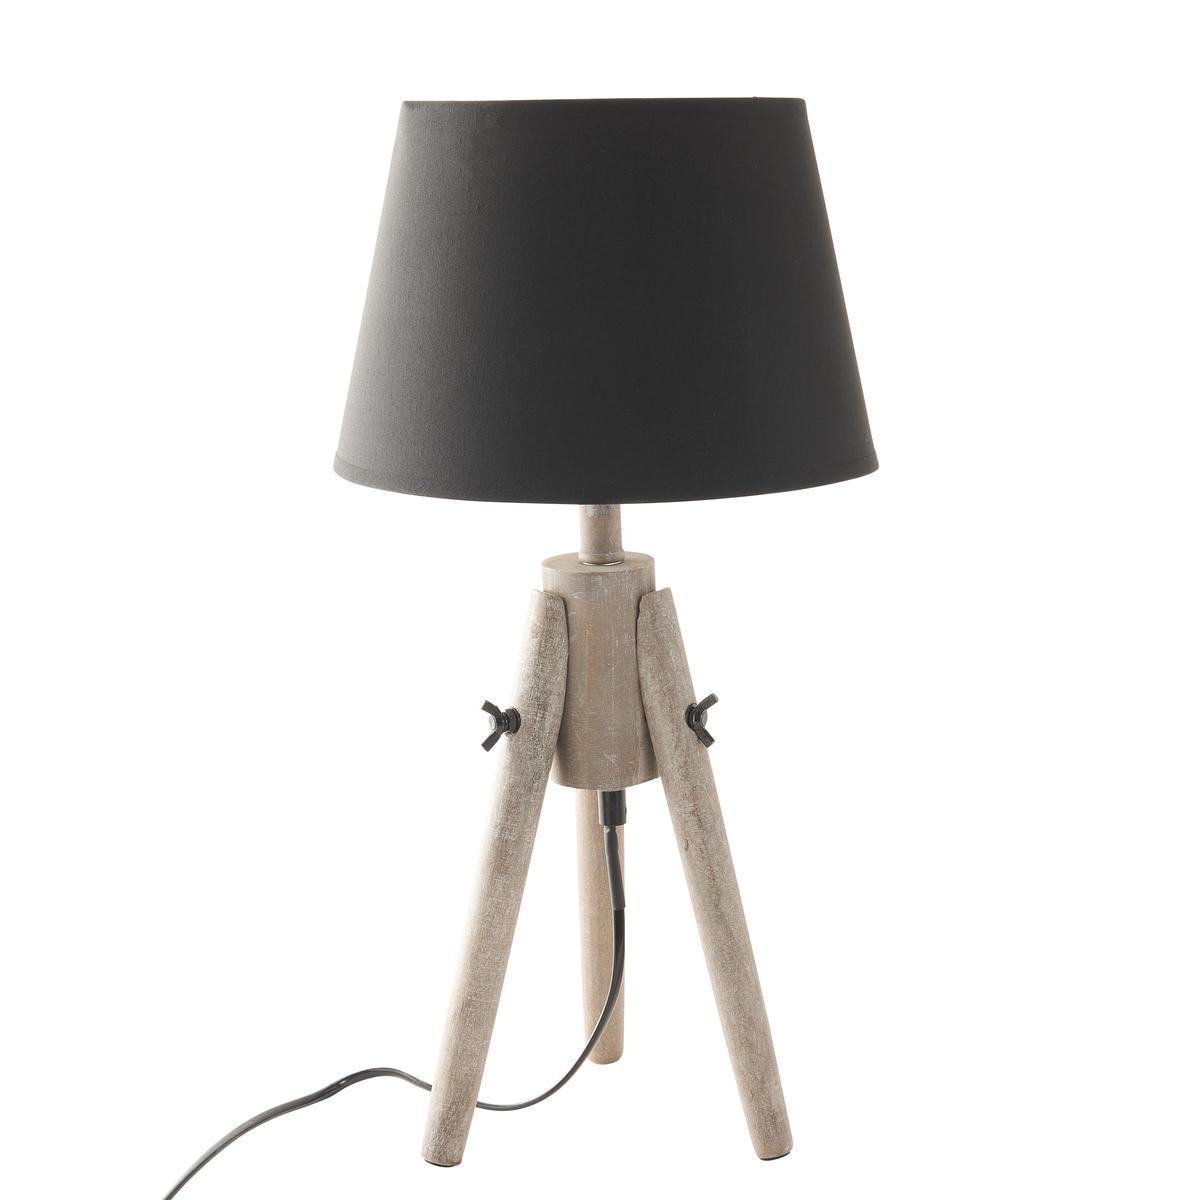 Lampe Miry - ø 24 x H 46 cm - Noir